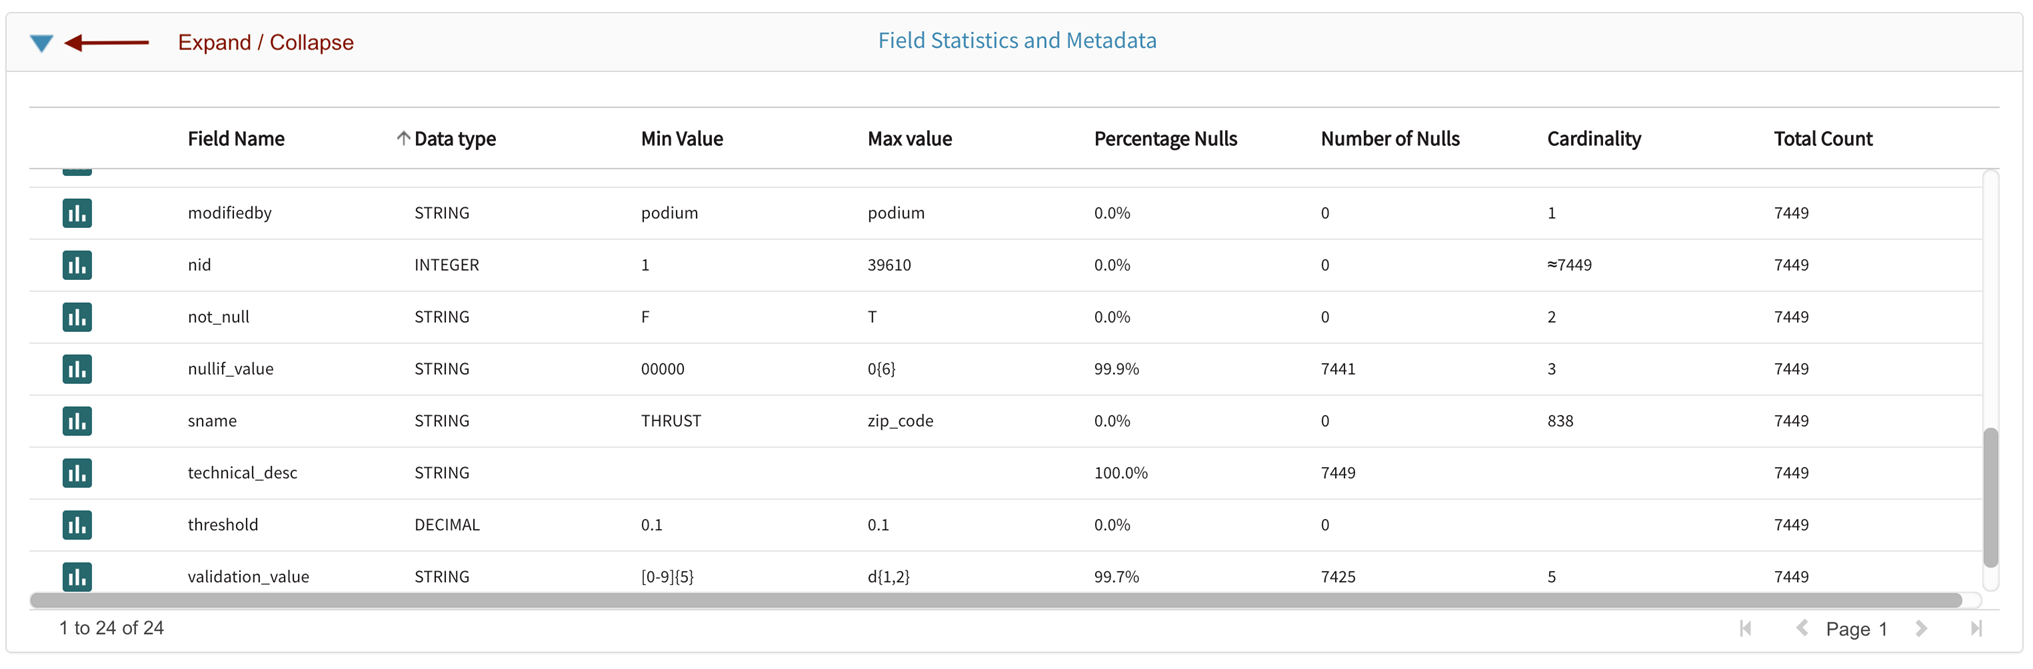 Field statistics and metadata grid